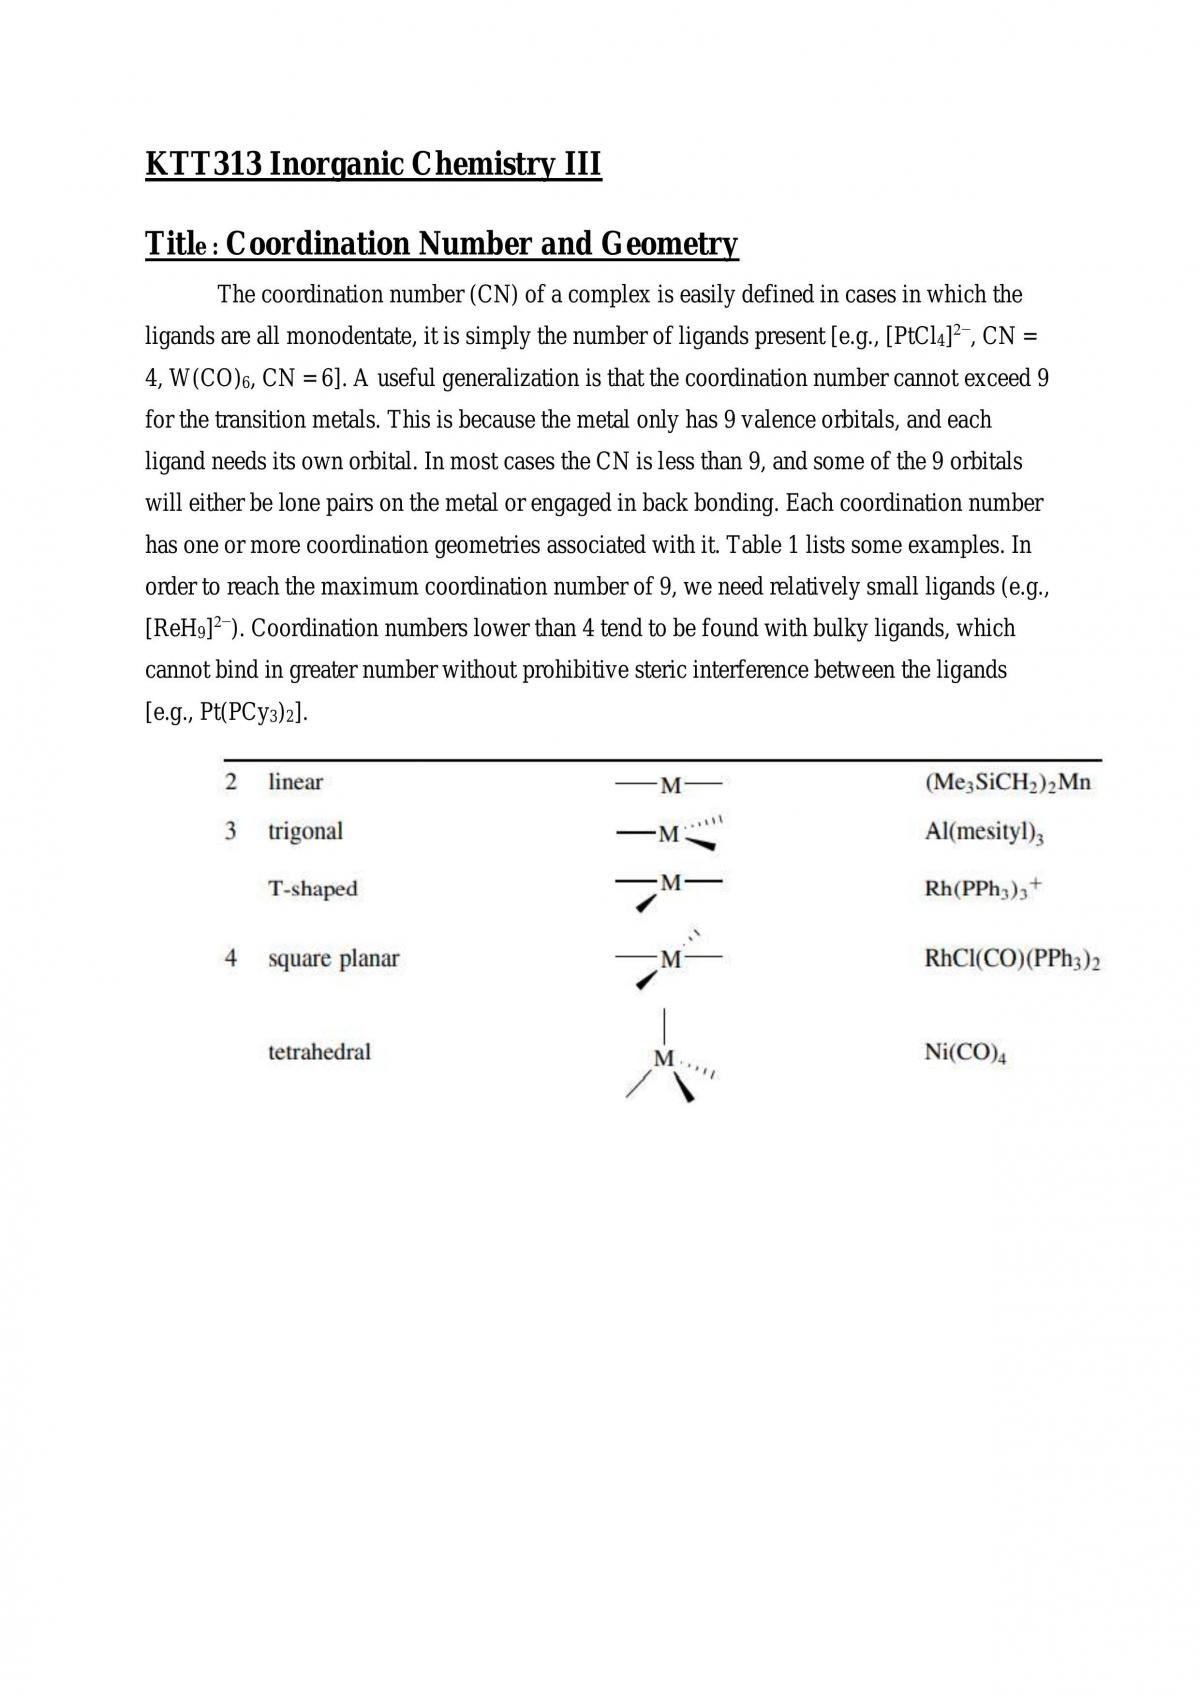 coordination-number-and-geometry-ktt313-inorganic-chemistry-iii-usm-thinkswap